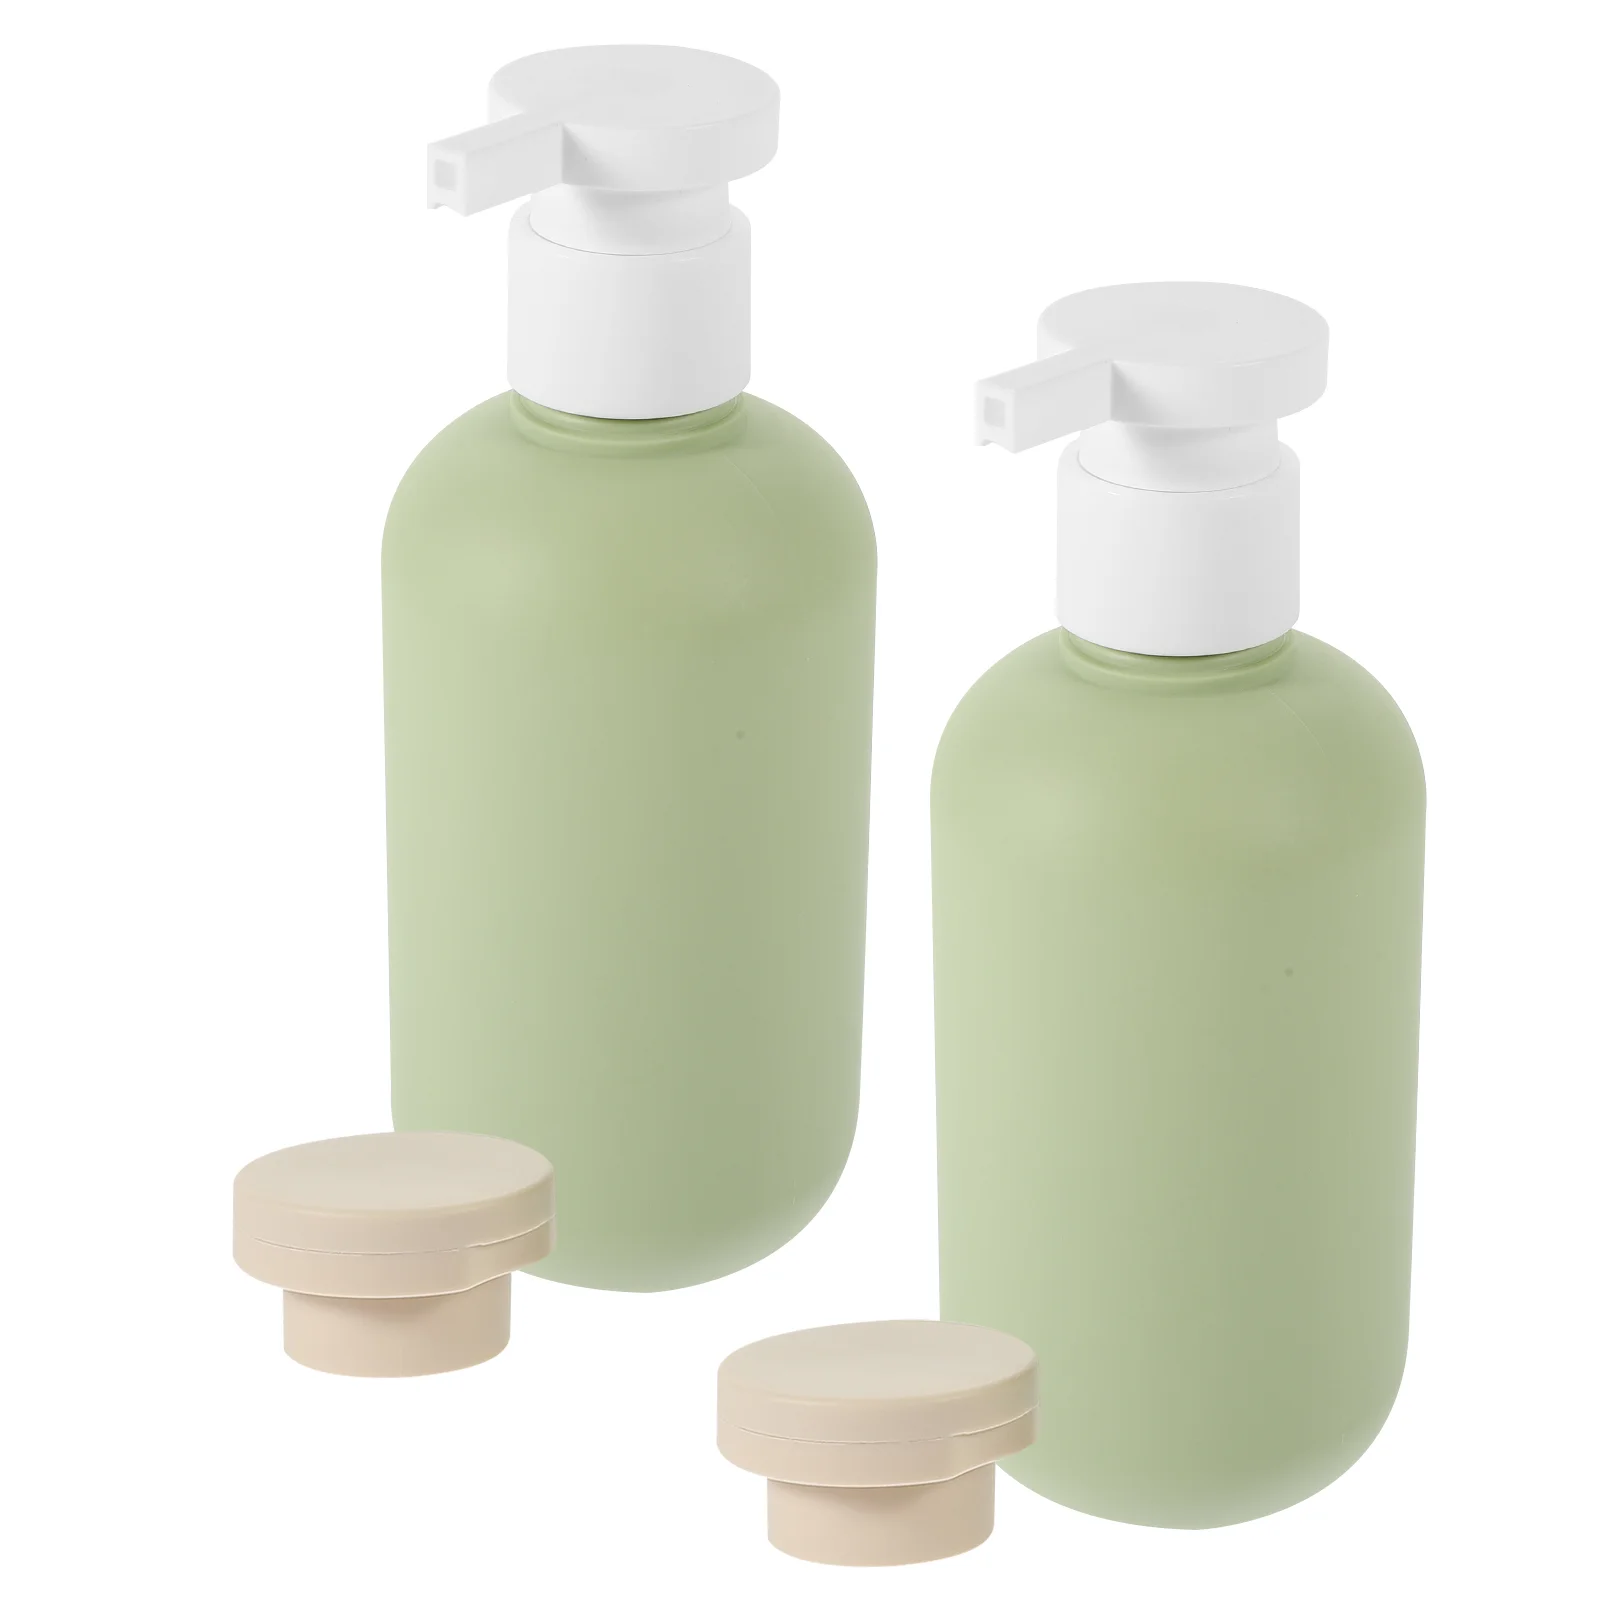 

2 Pcs Refillable Shampoo Bottles Lotion Replacement Pump Heads Emollient Body Wash Dispenser Empty Plastic Travel